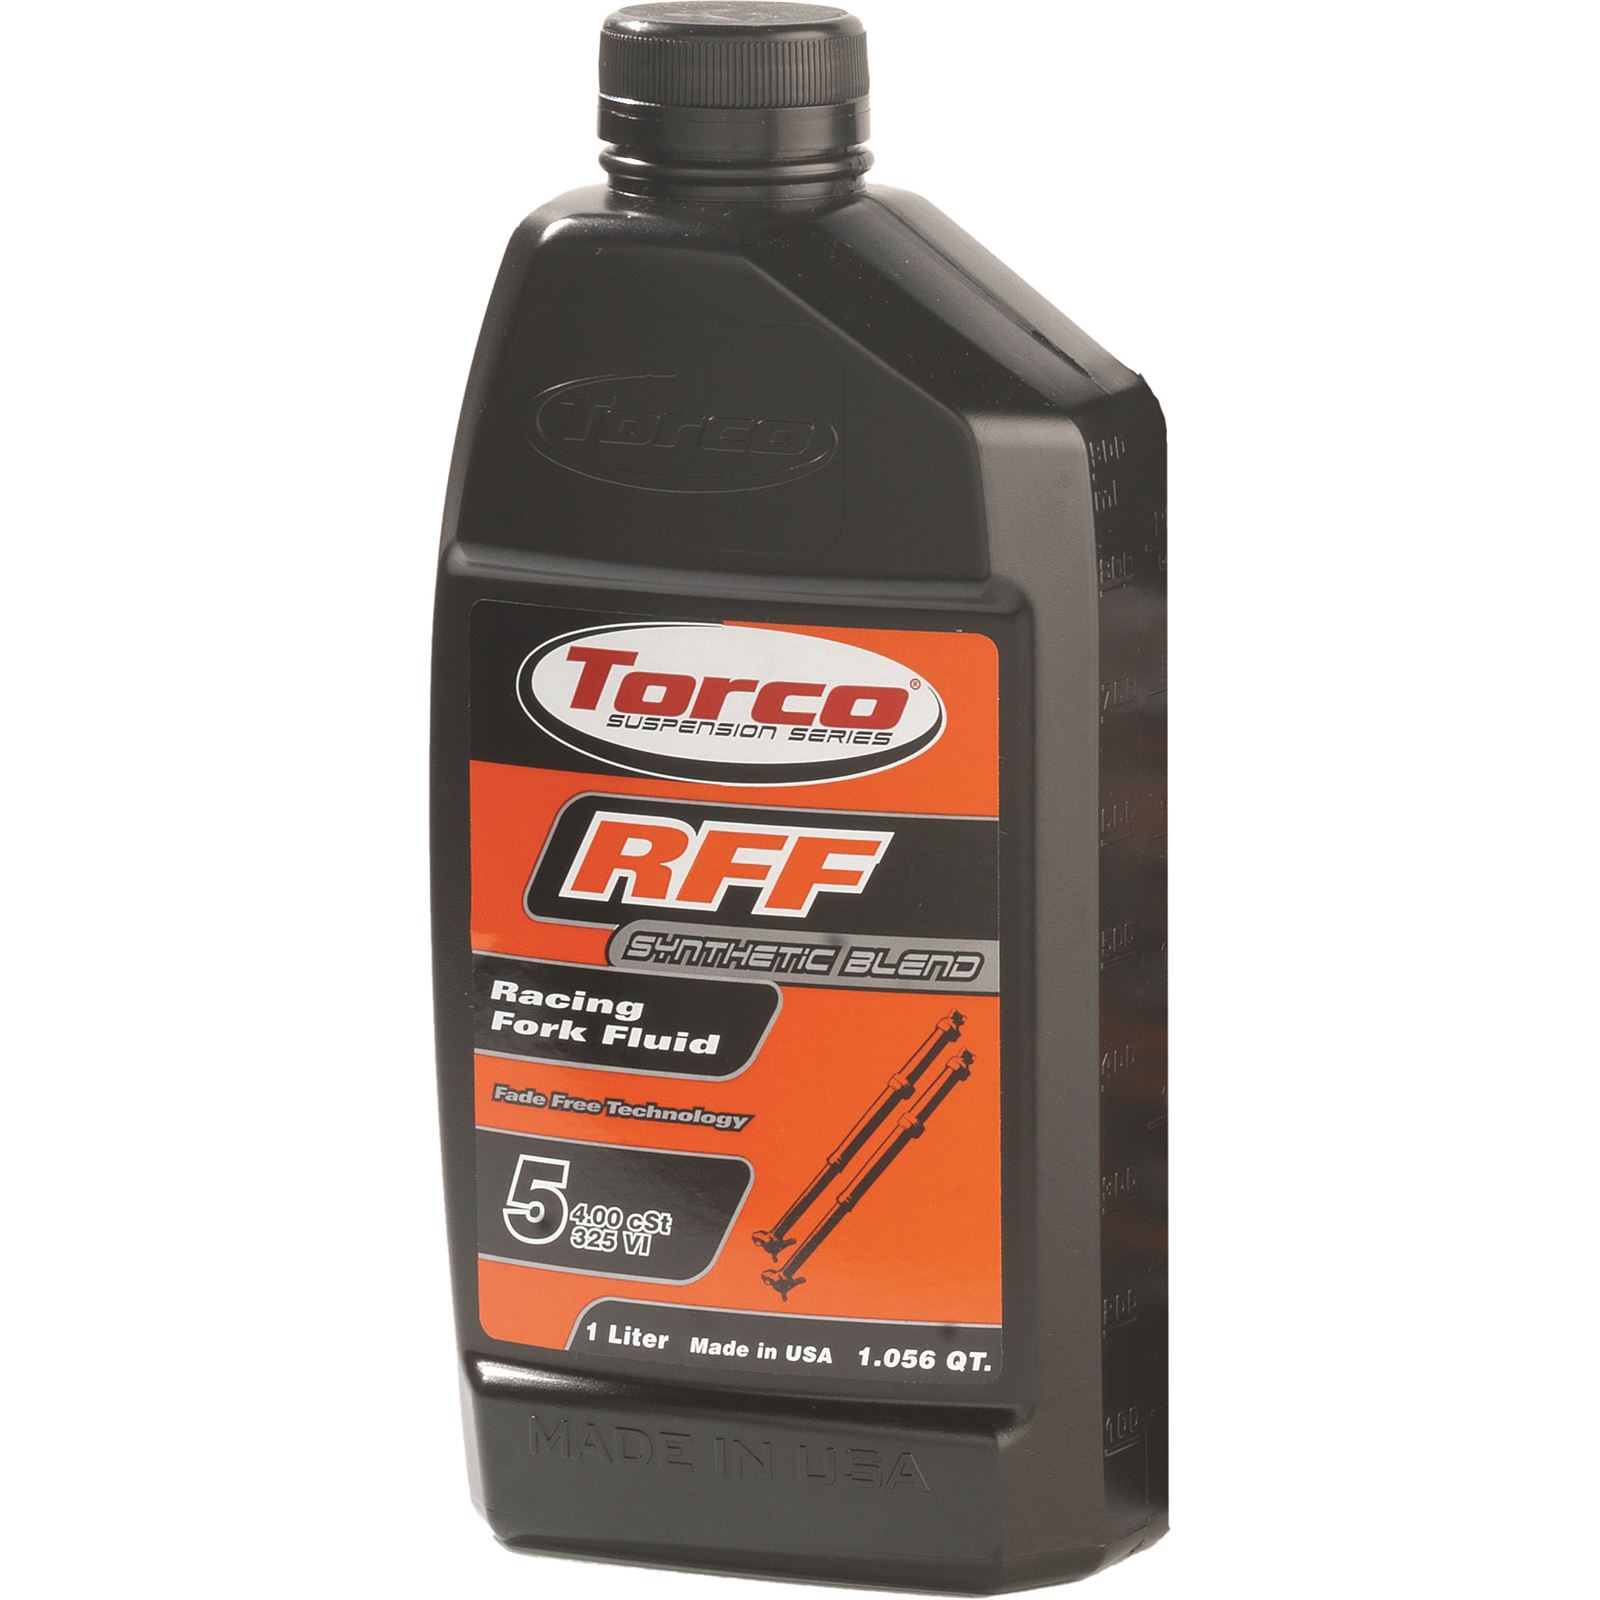 Torco RFF Racing Fork Fluid